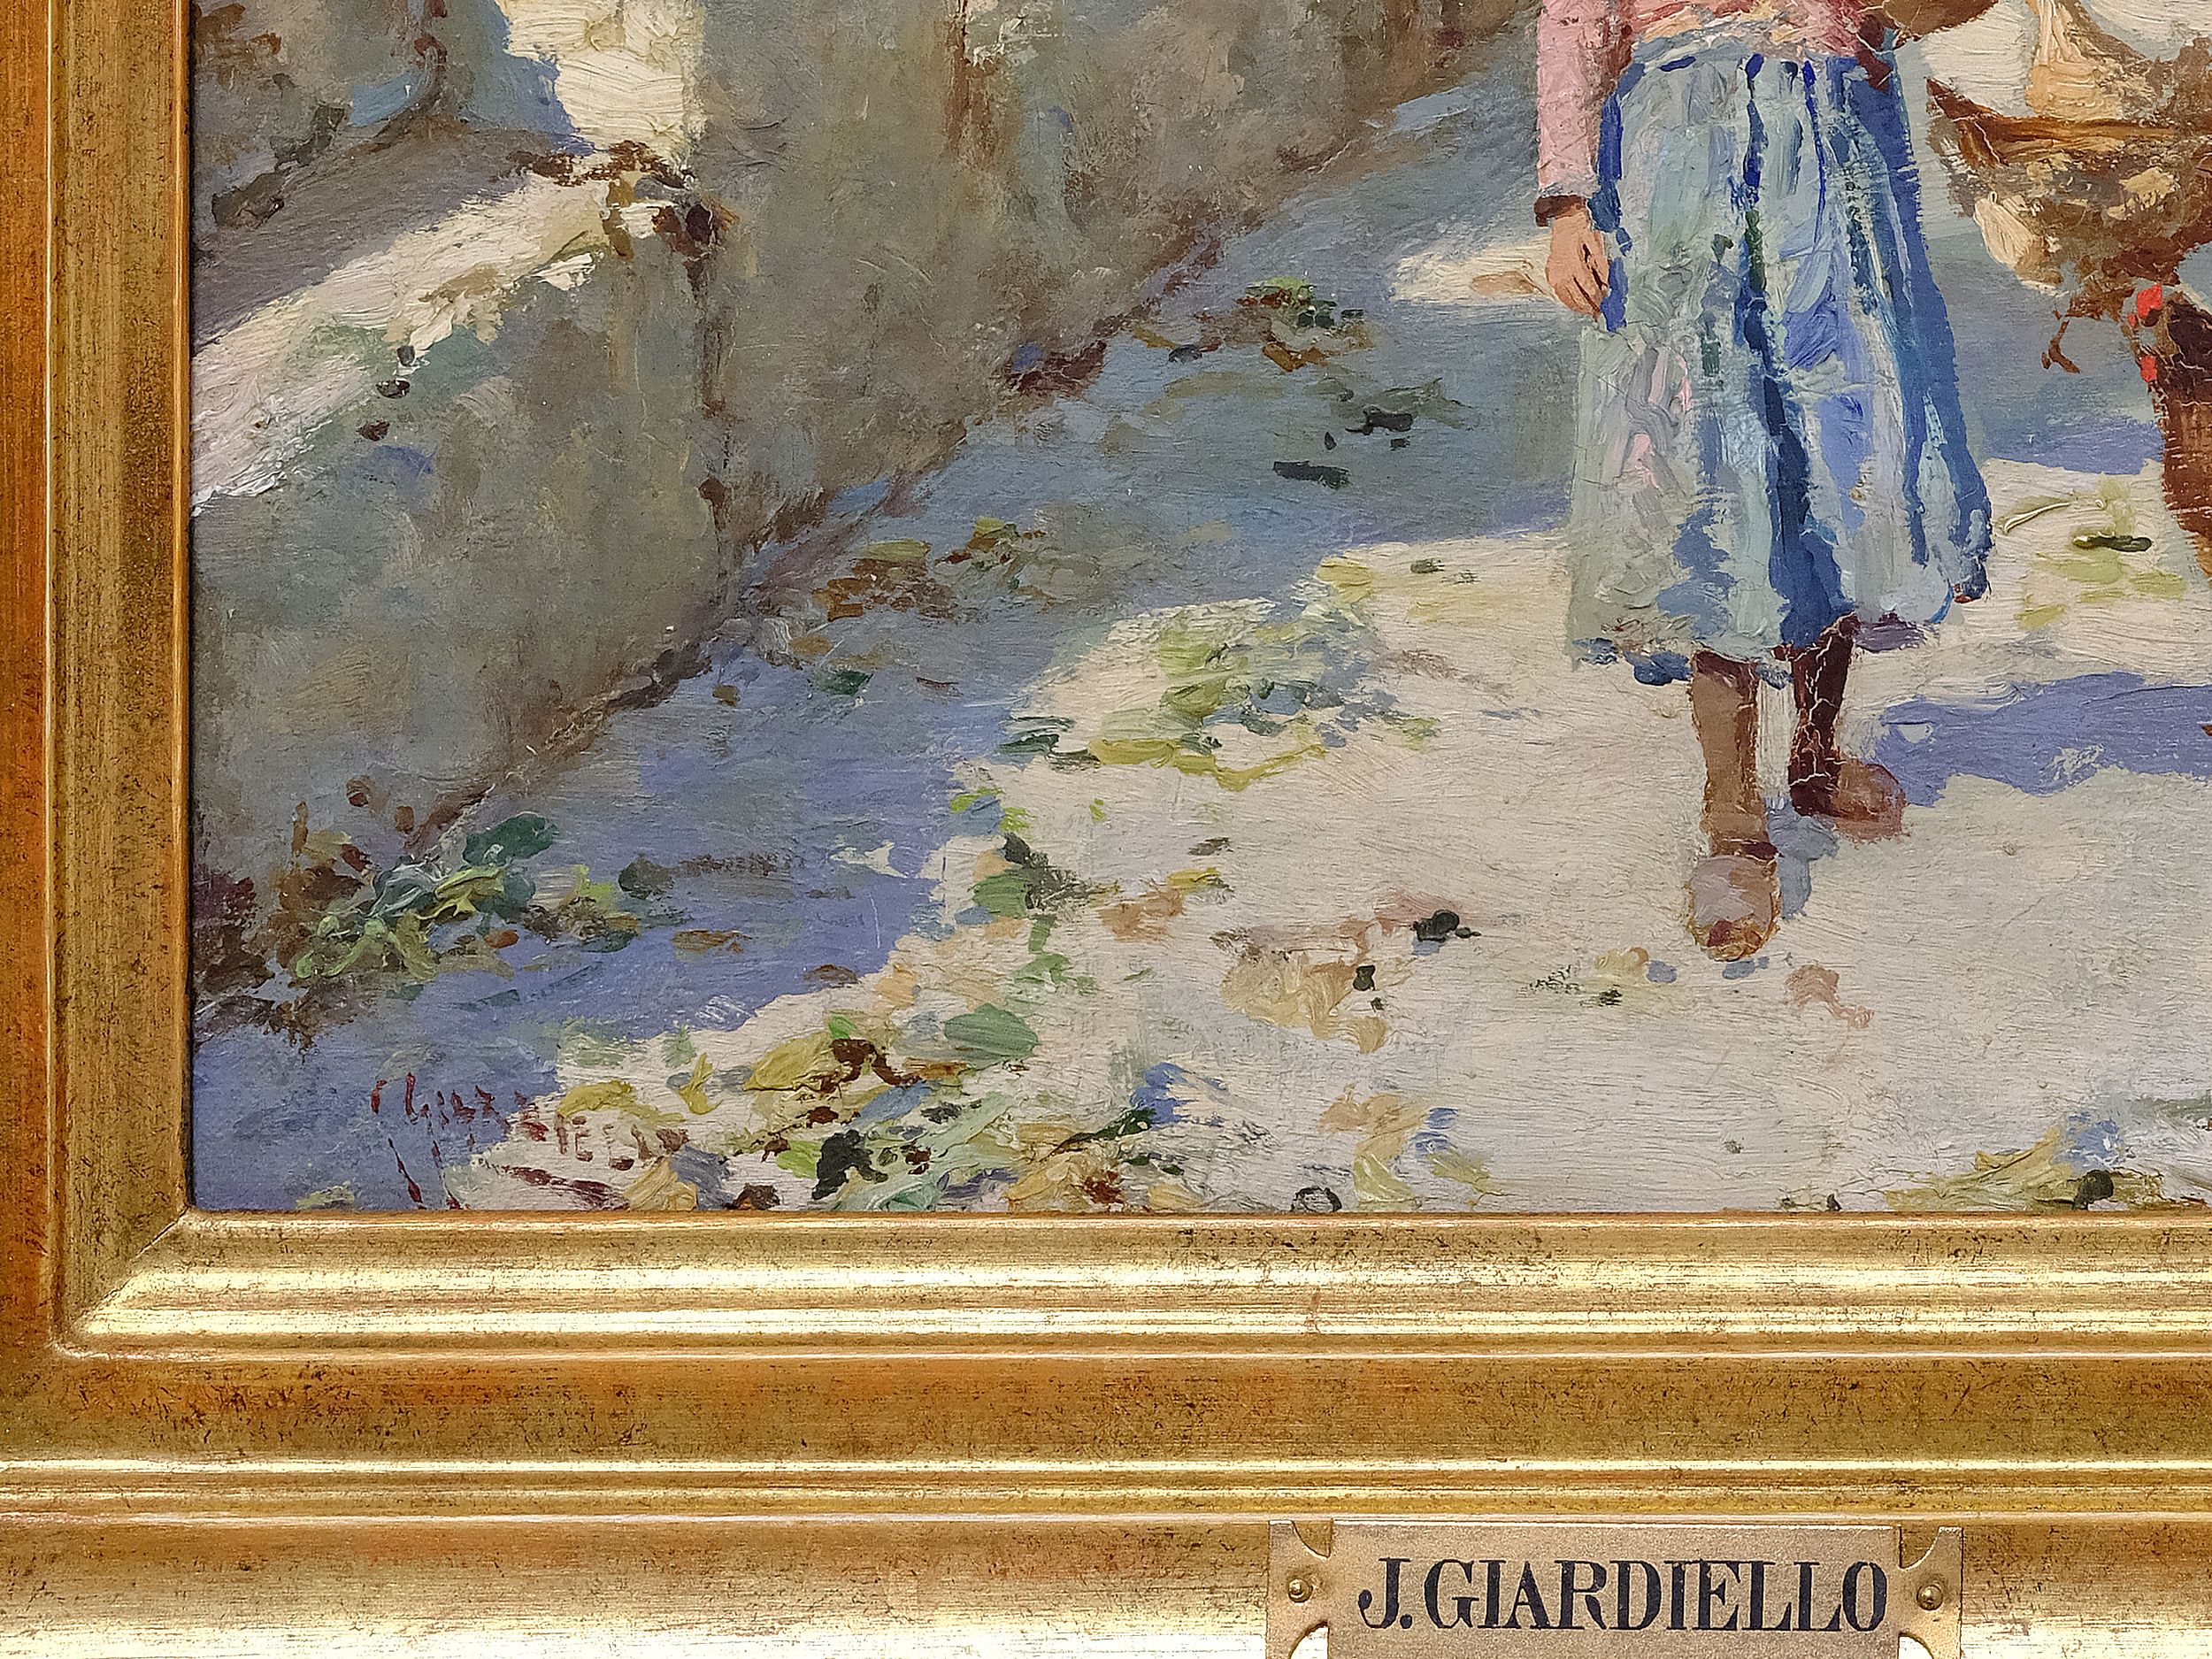 Giuseppe Giardiello, Naples 1877 - 1920, Summer day in Naples - Image 4 of 5